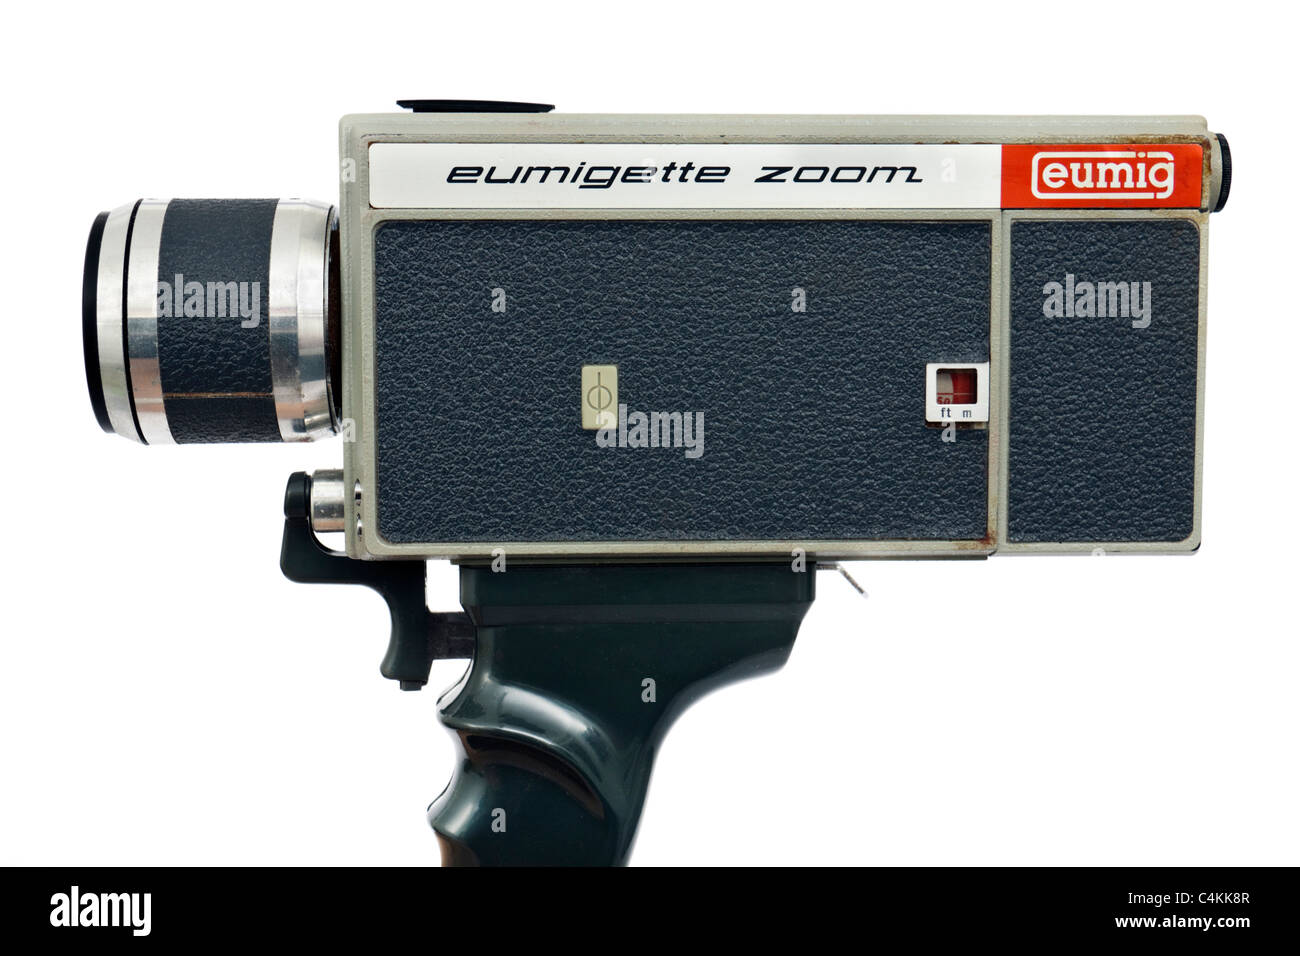 https://c8.alamy.com/comp/C4KK8R/vintage-eumigette-zoom-8mm-home-movie-film-camera-C4KK8R.jpg